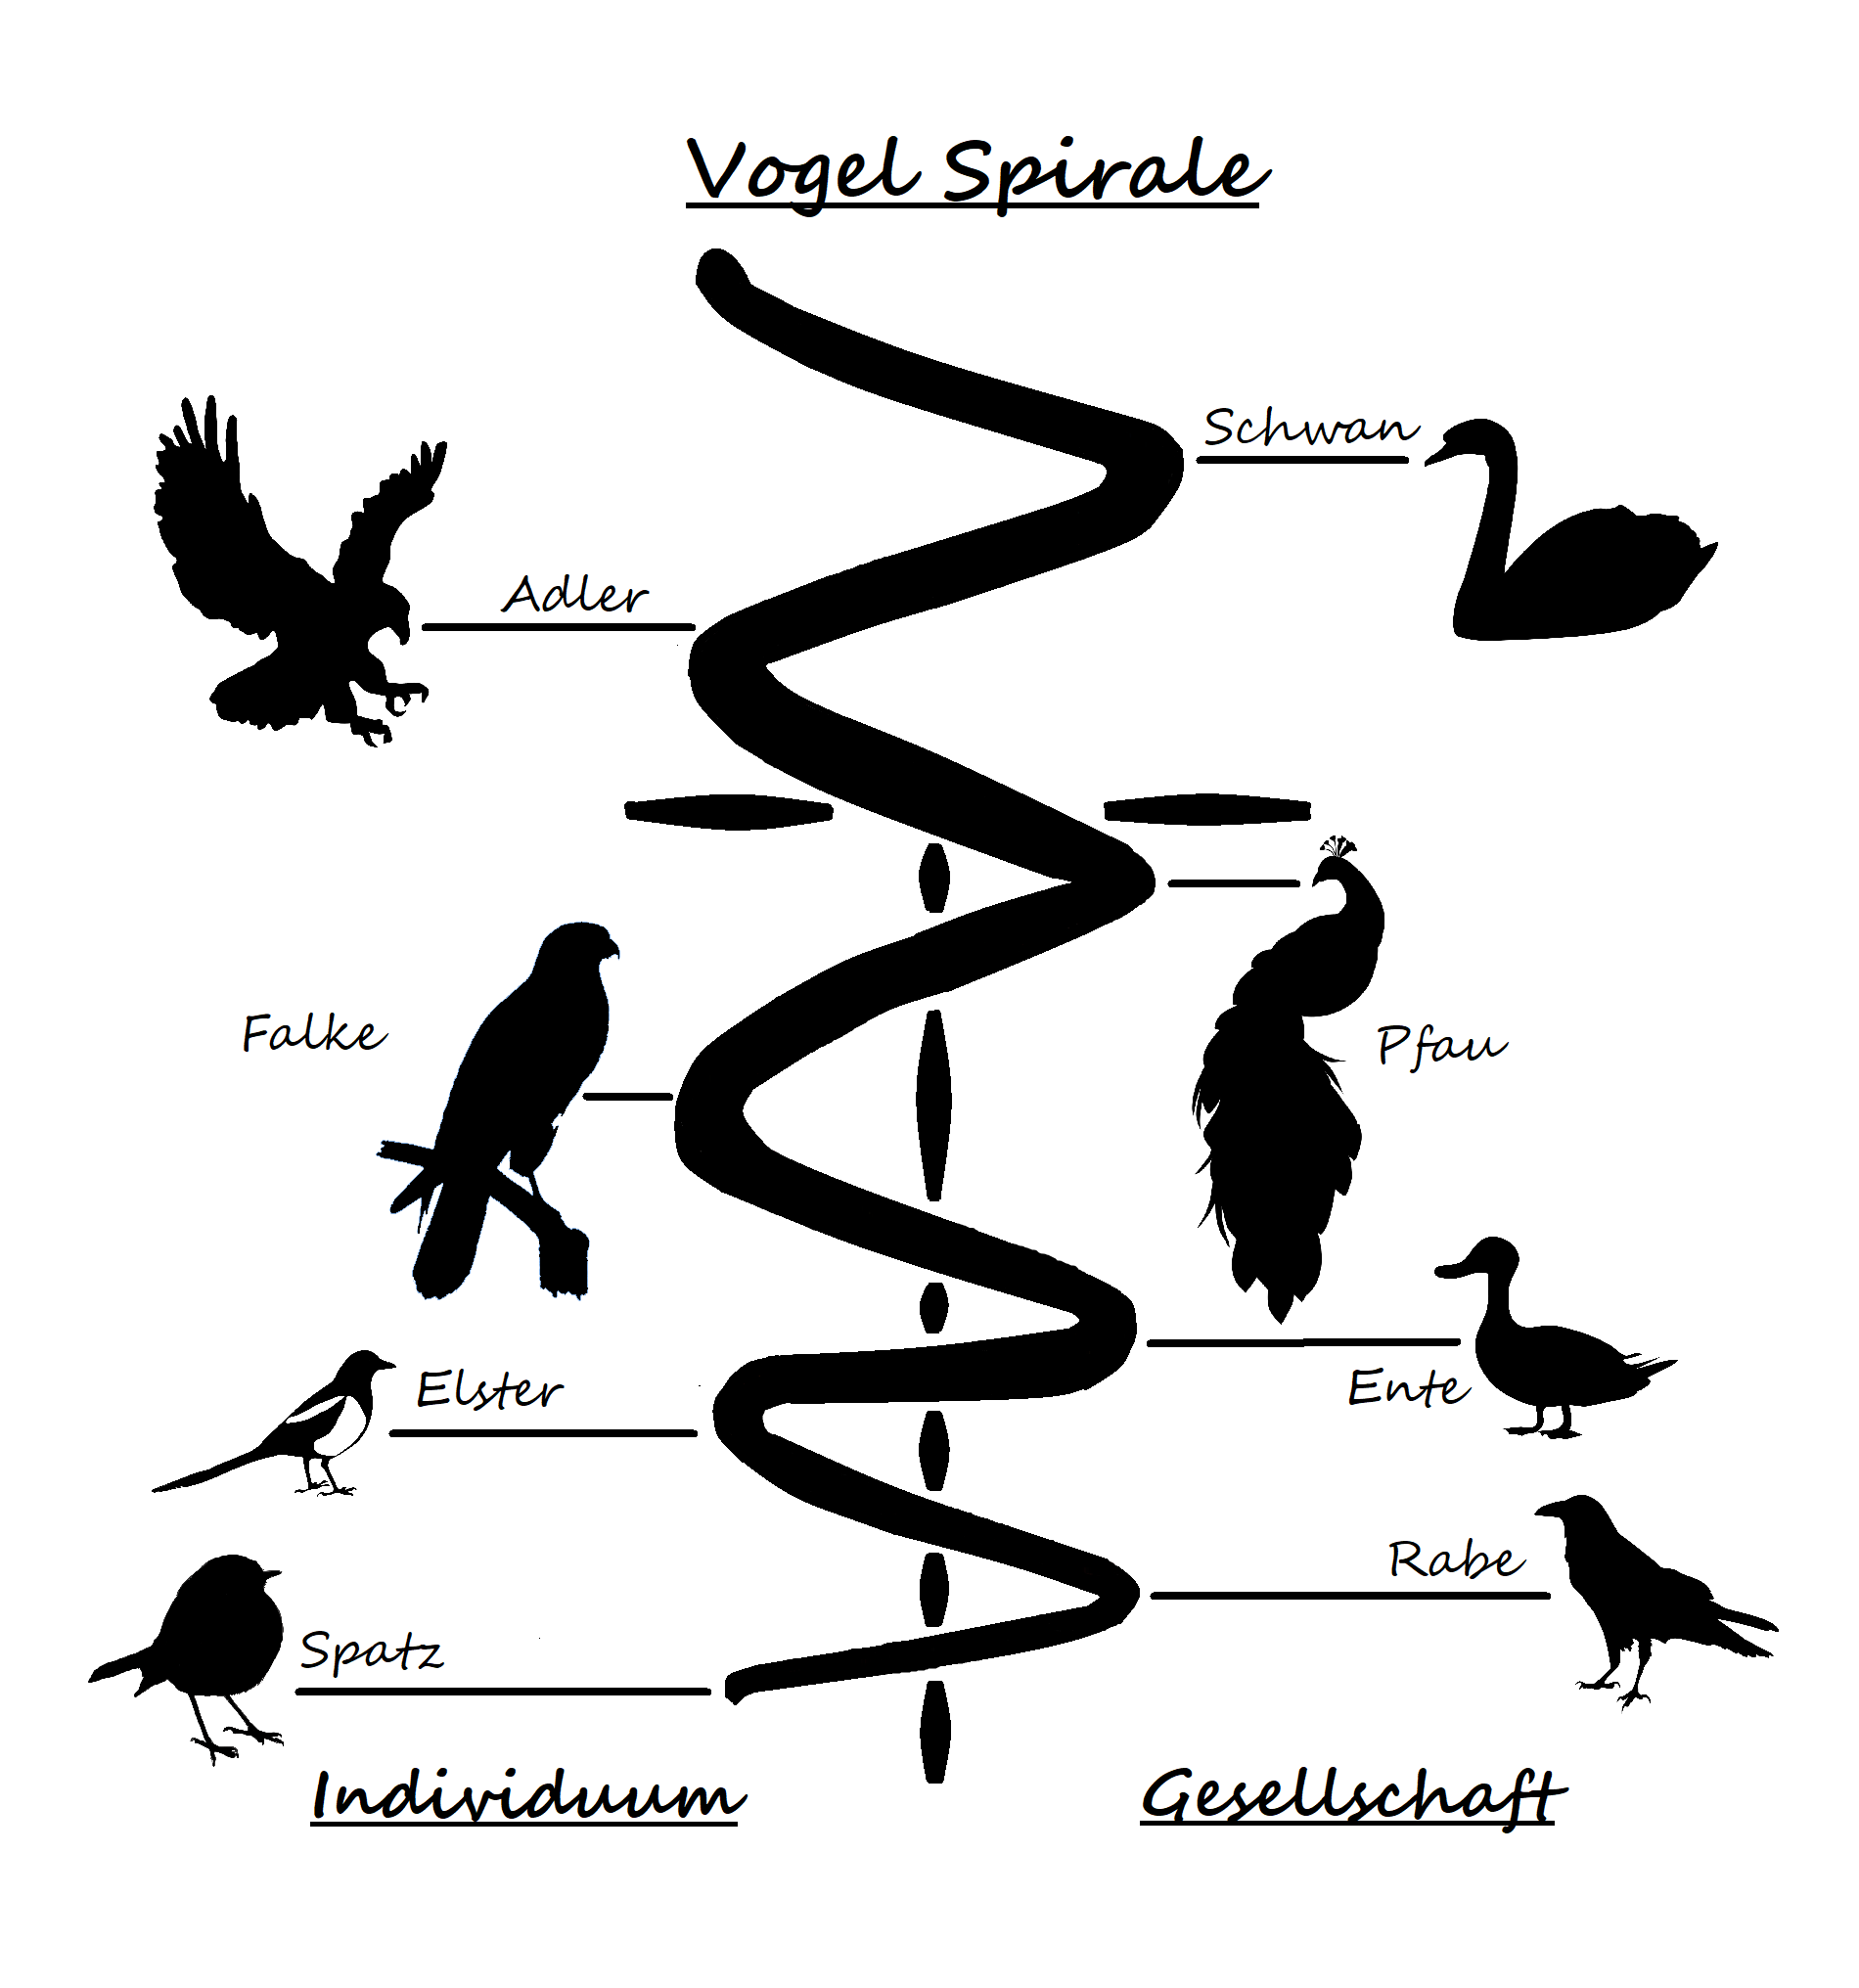 Vogel-Spirale